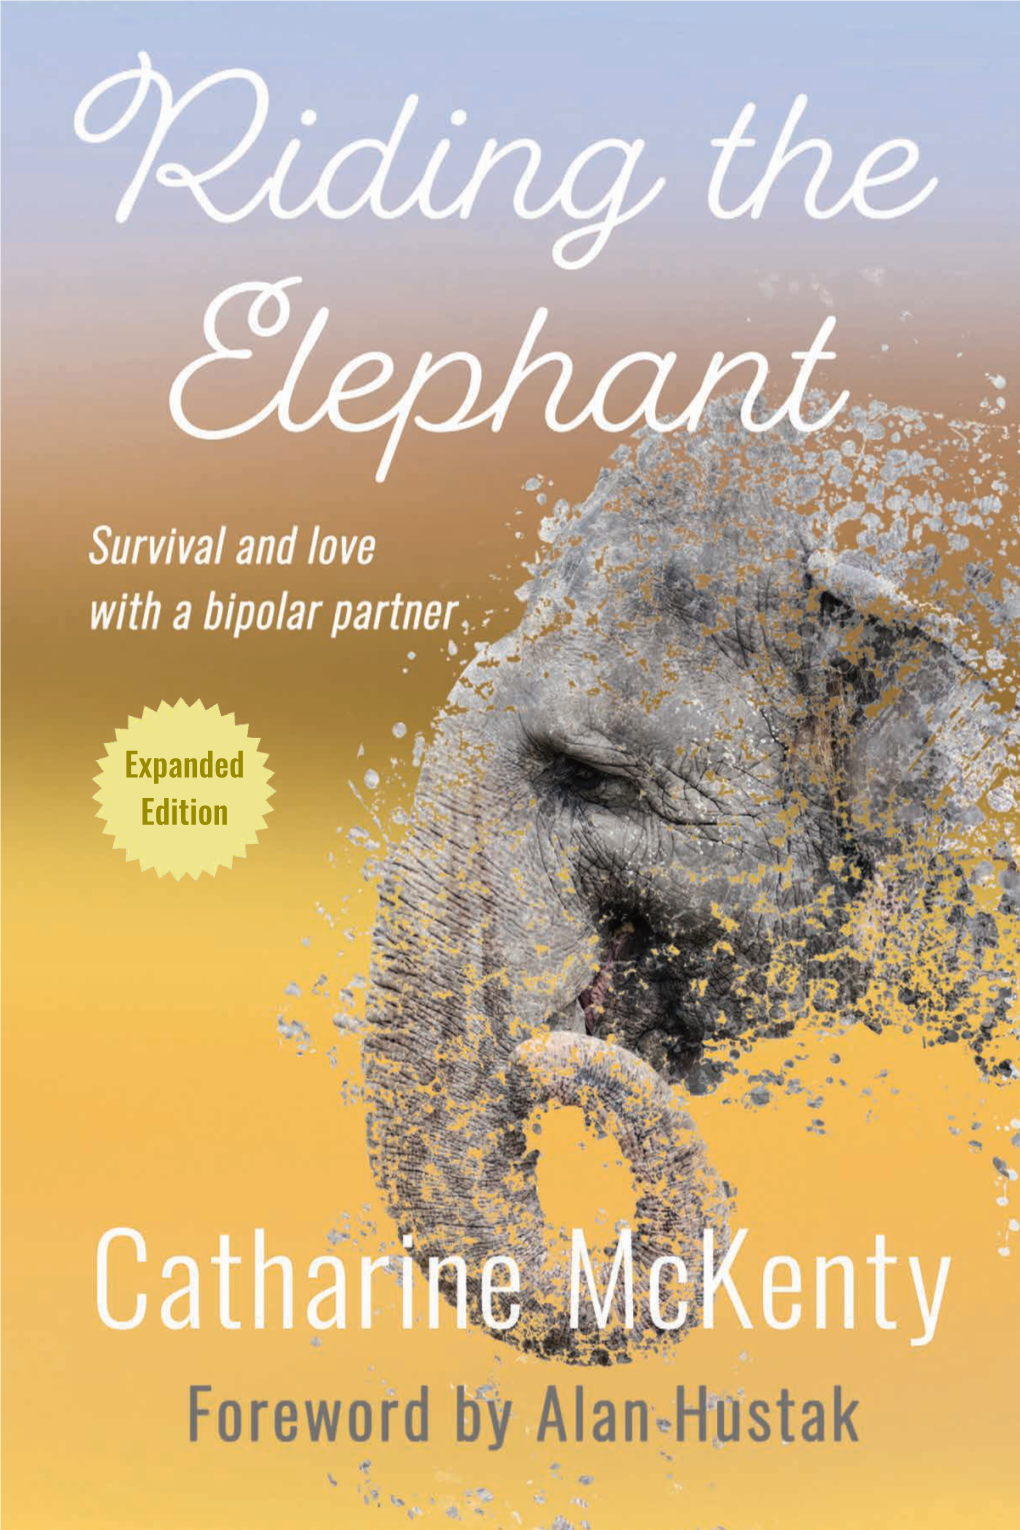 Catharine Mckenty Foreword by Alan Hustak